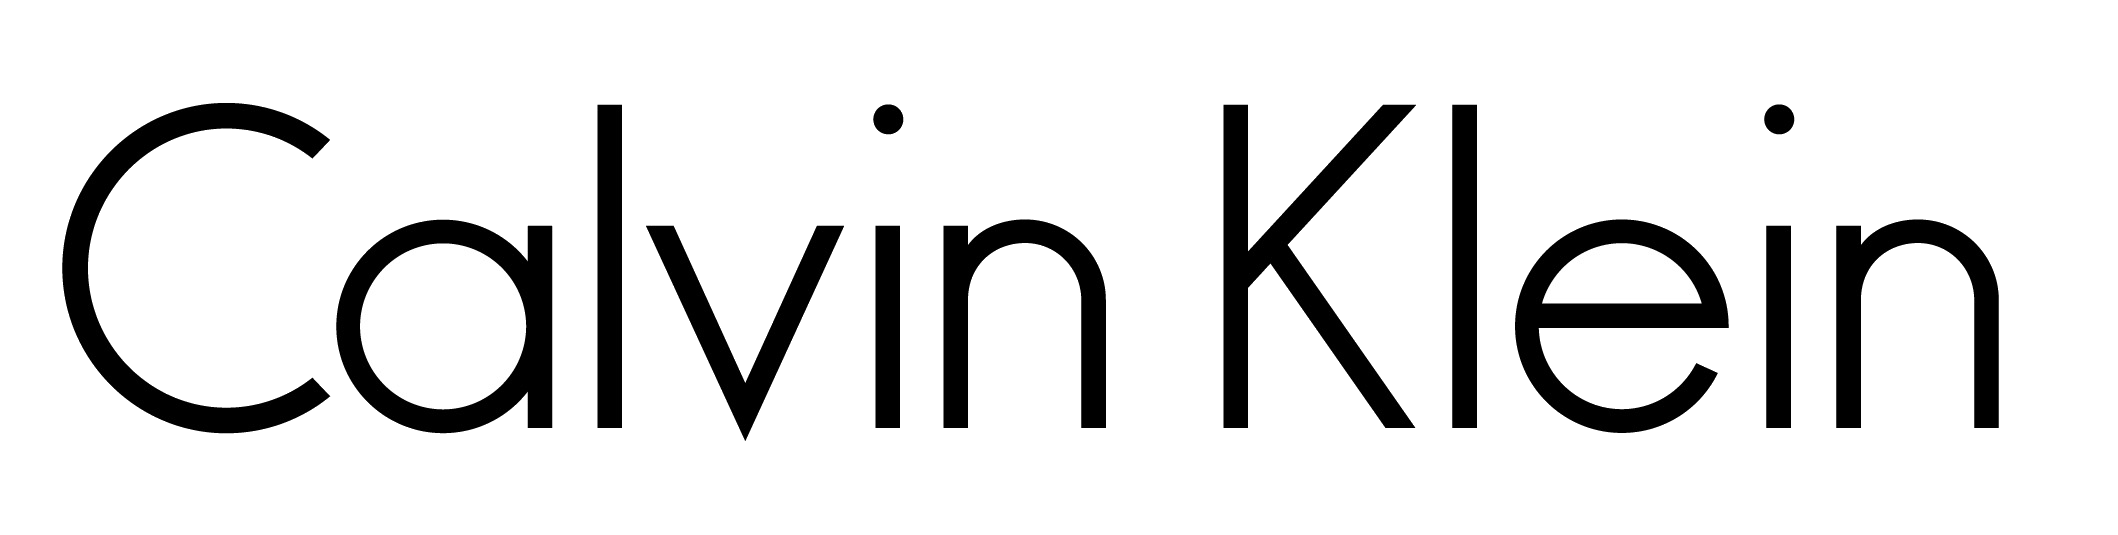 Calvin Klein Logo Png Images,